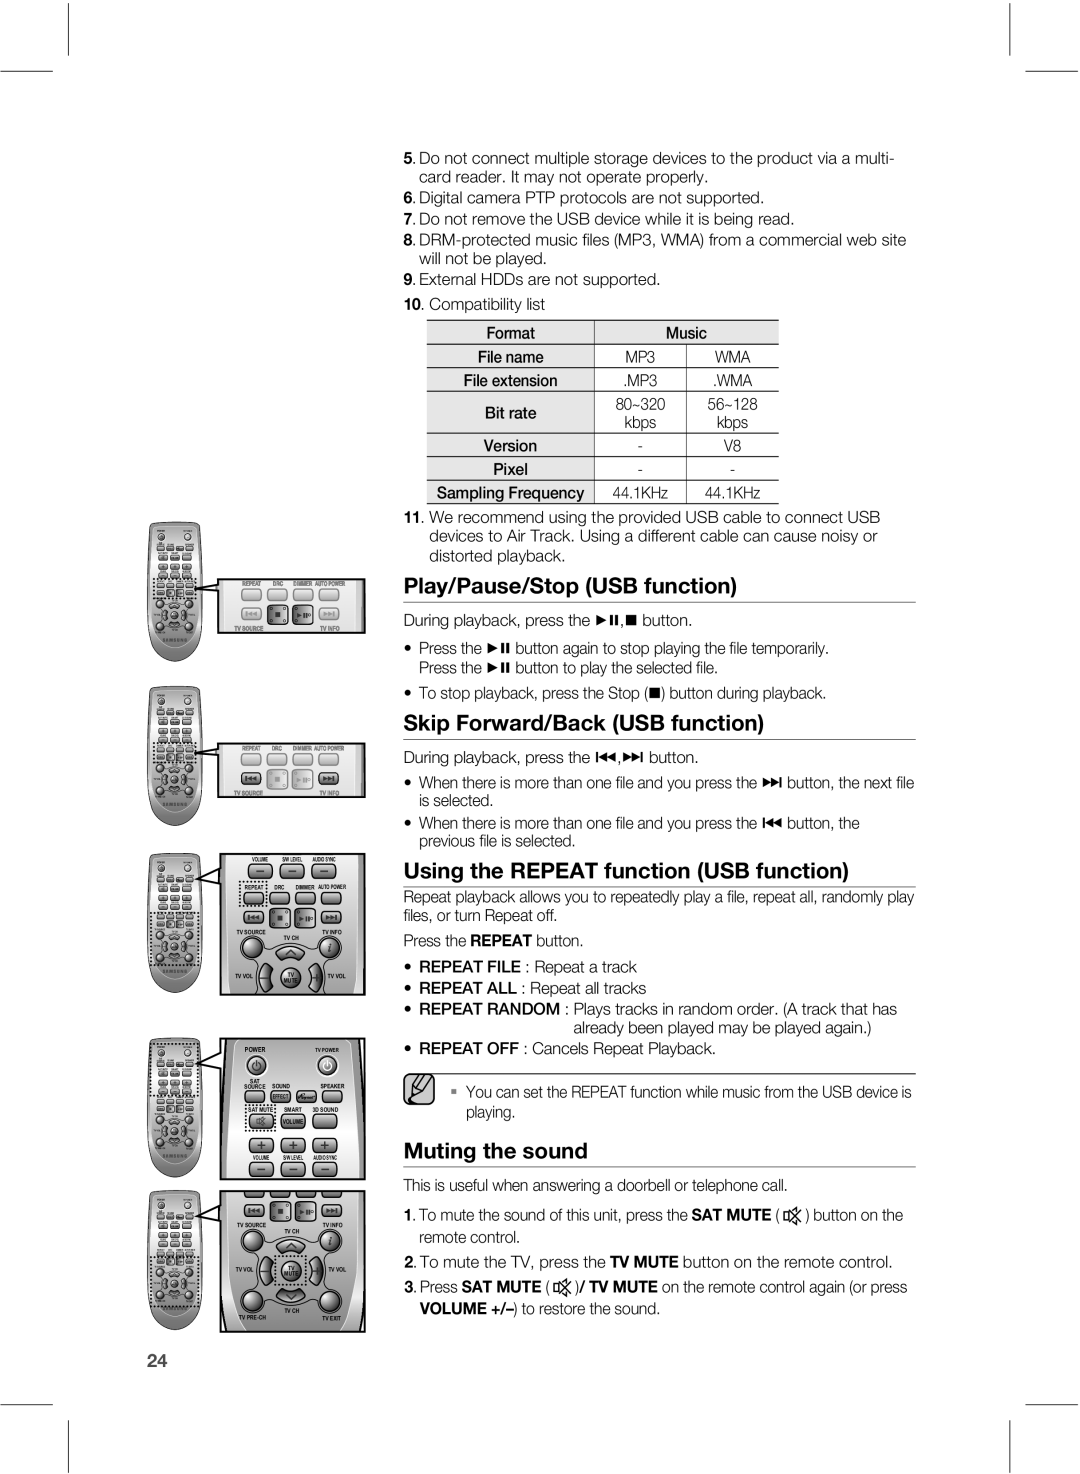 Samsung HWE550 manual 1MBZ1BVTF4UPQ 64#GVODUJPO, 4LJQPSXBSE#BDL 64#GVODUJPO, 6TJOHUIF3&1&5GVODUJPO 64#GVODUJPO 